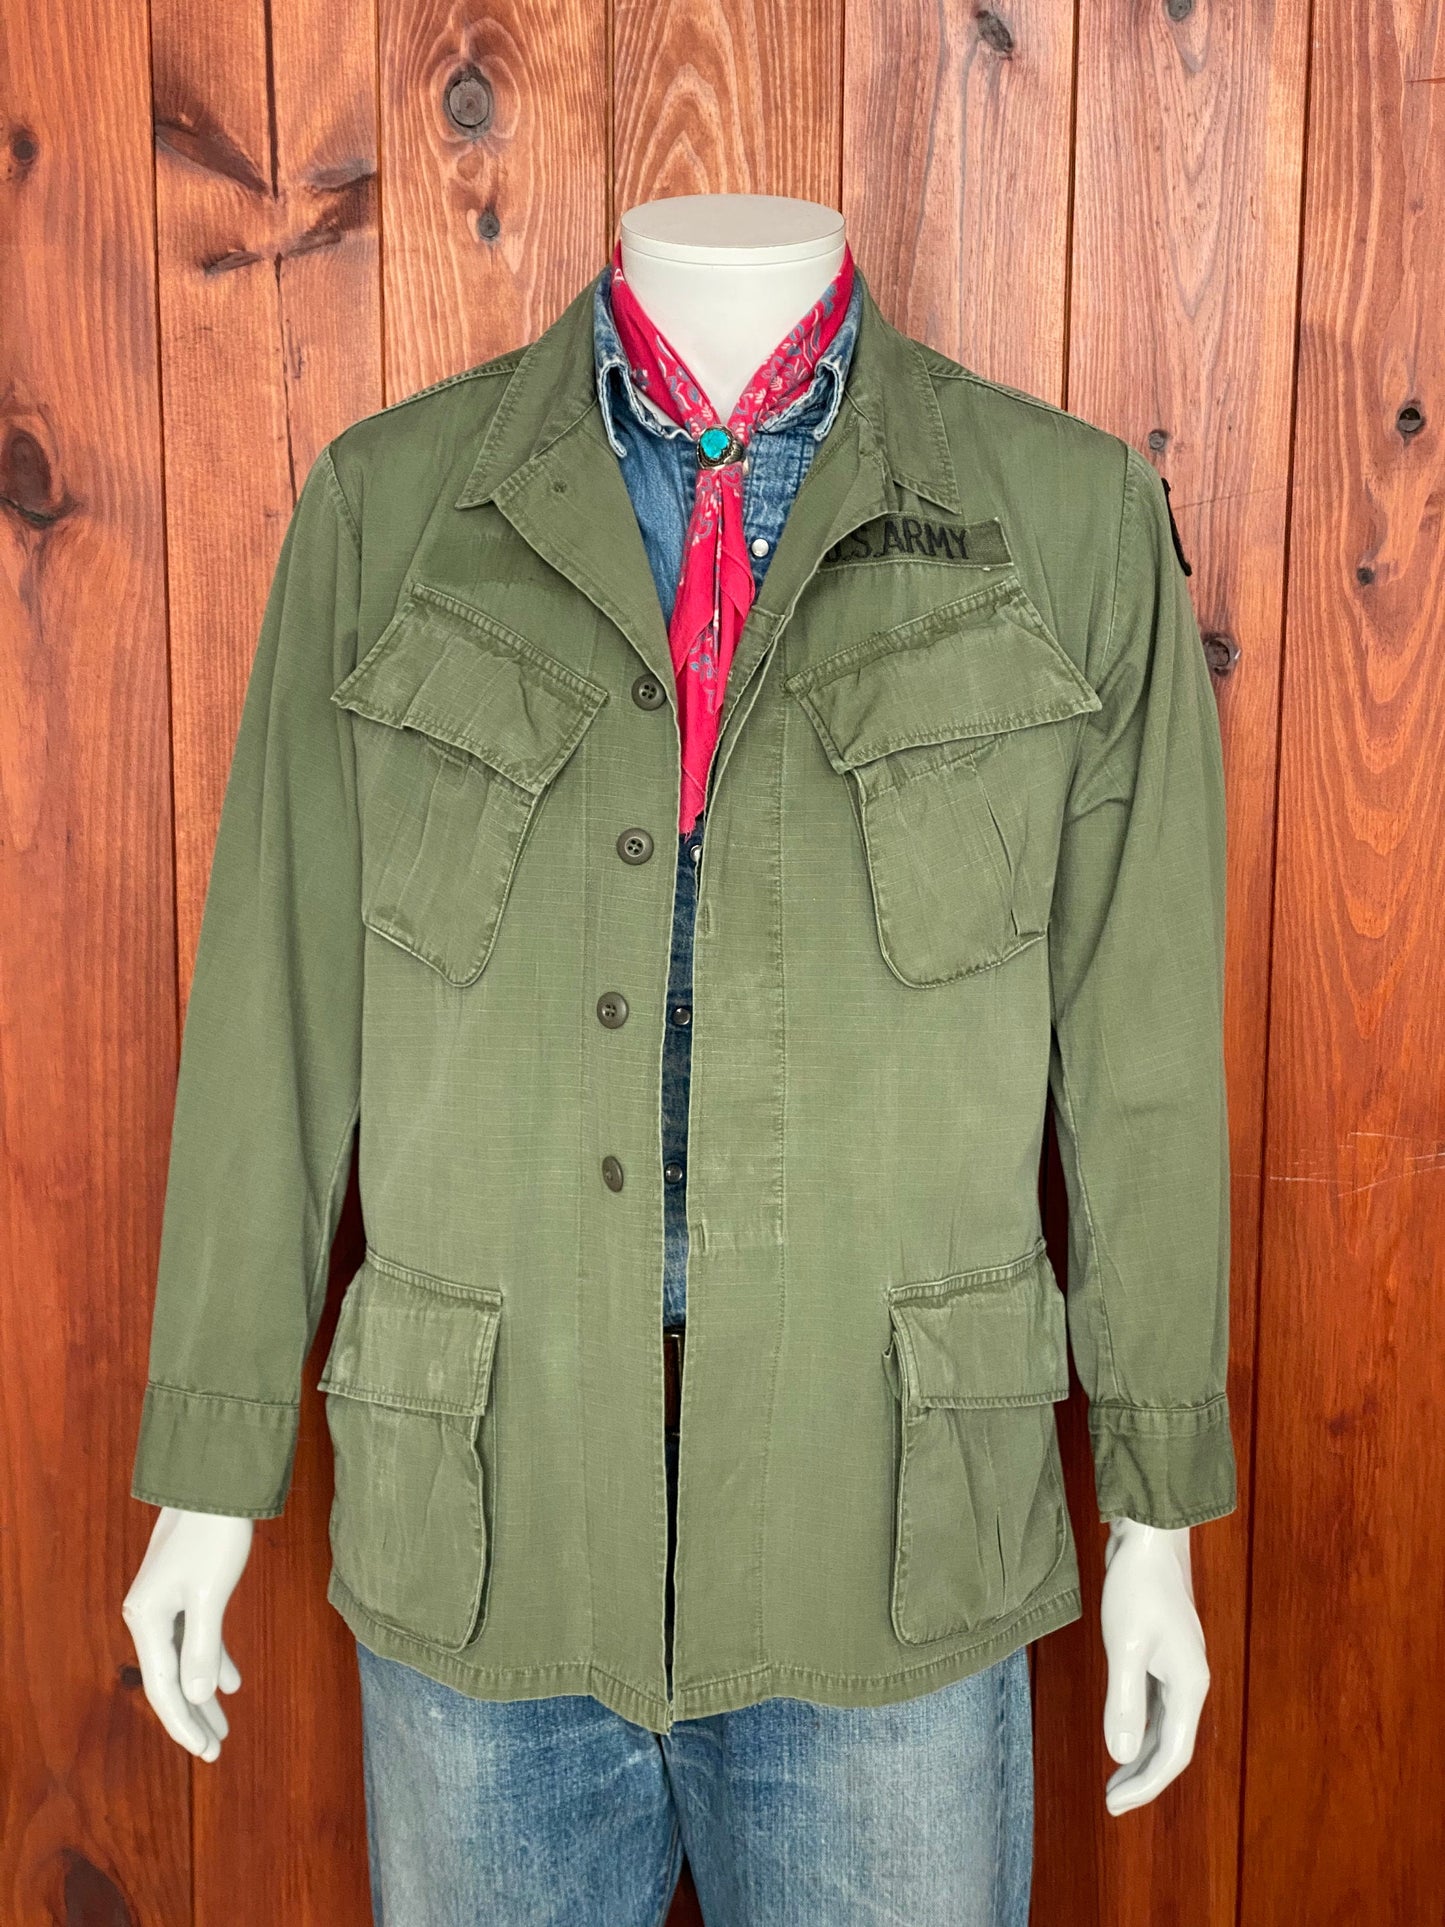 Med Reg. Authentic 1969 US Army Vintage tropical Vietnam  jungle jacket.